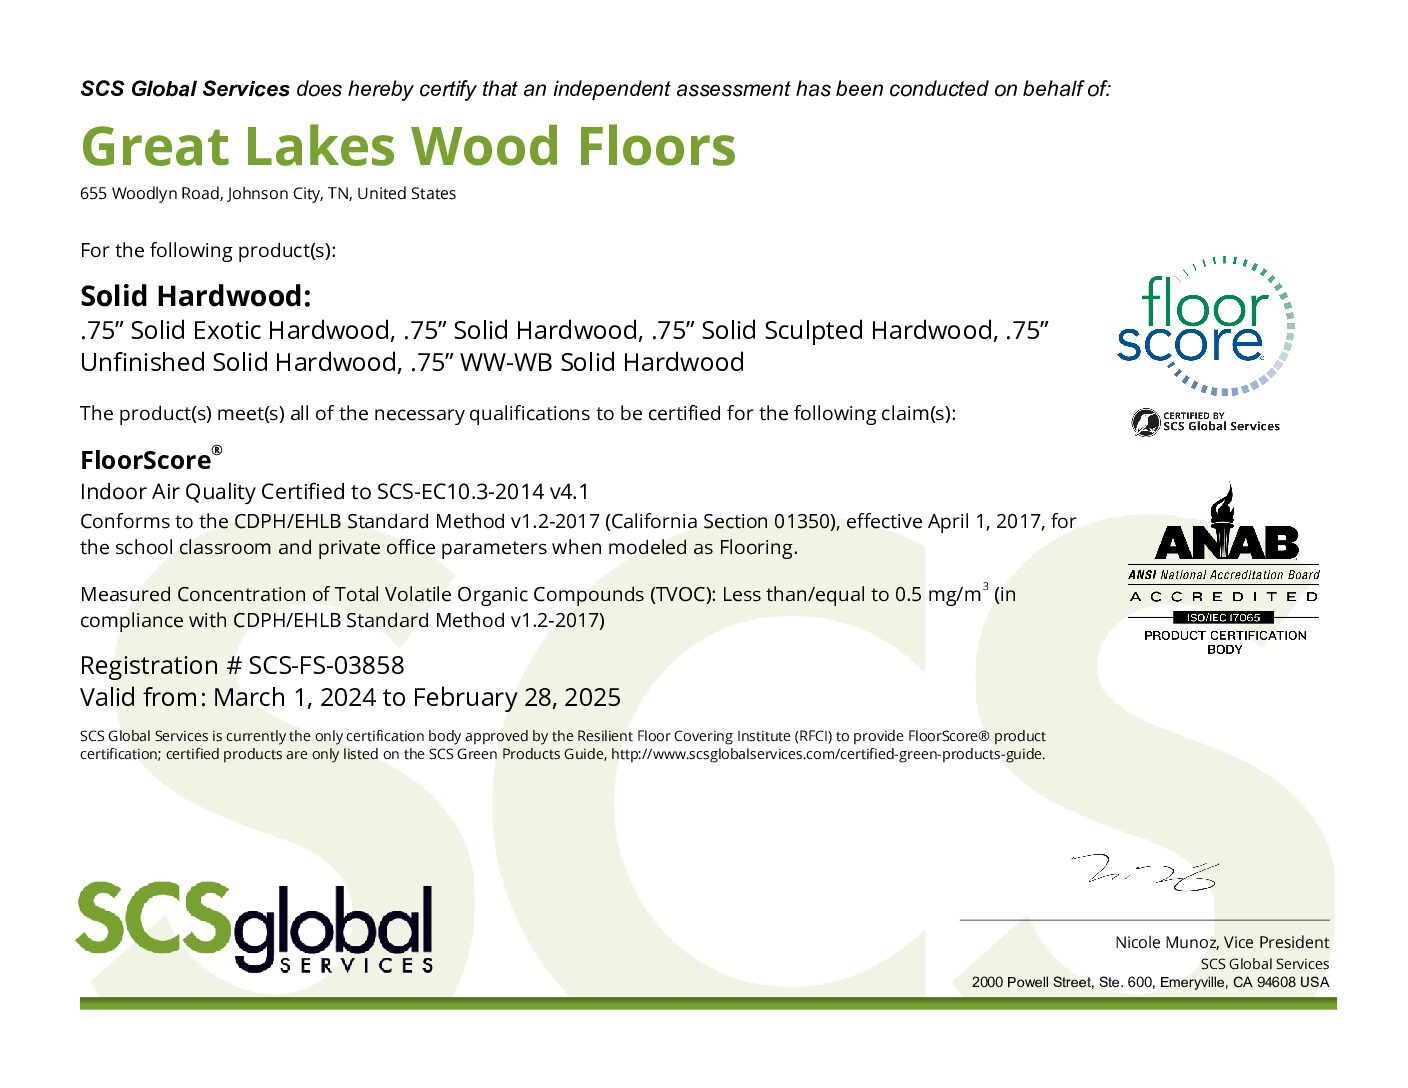 Great Lakes Wood Floors Solid Hardwood FloorScore® Certificate